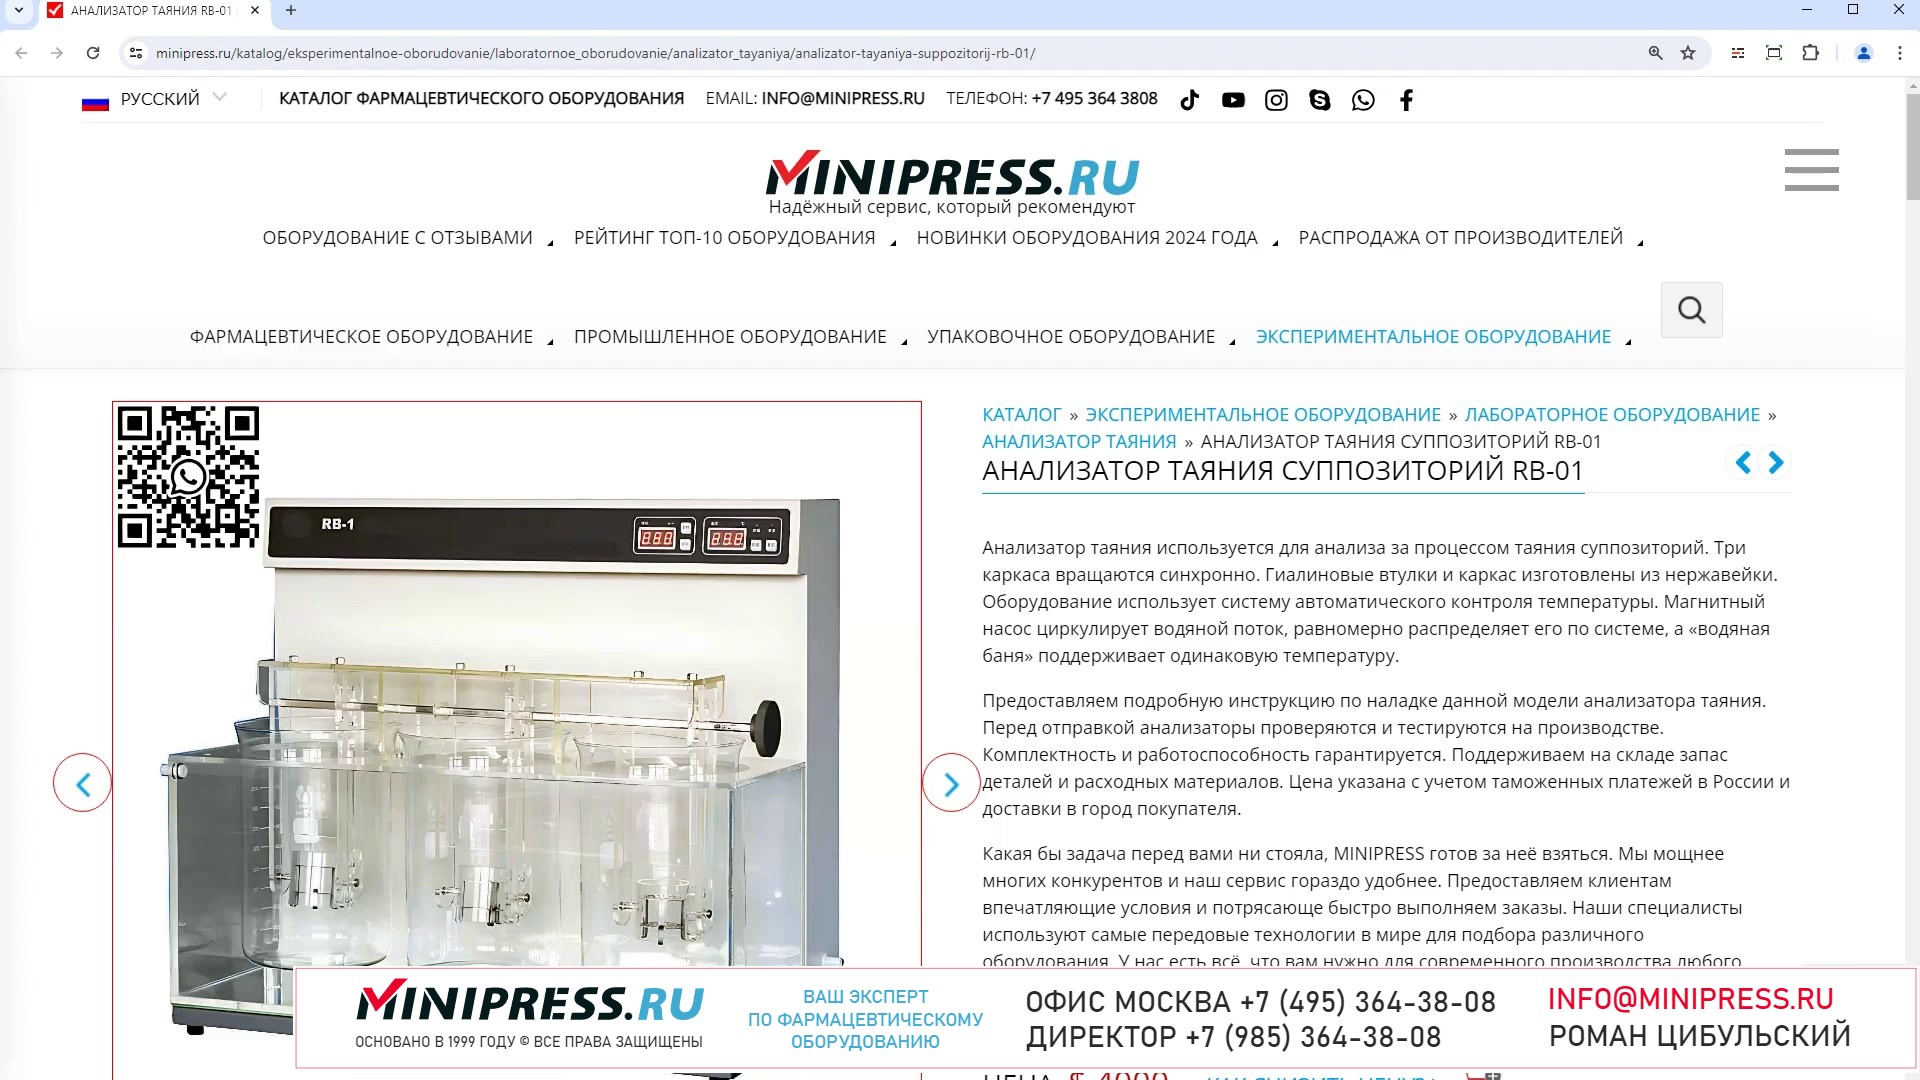 Minipress.ru Анализатор таяния суппозиторий RB-01